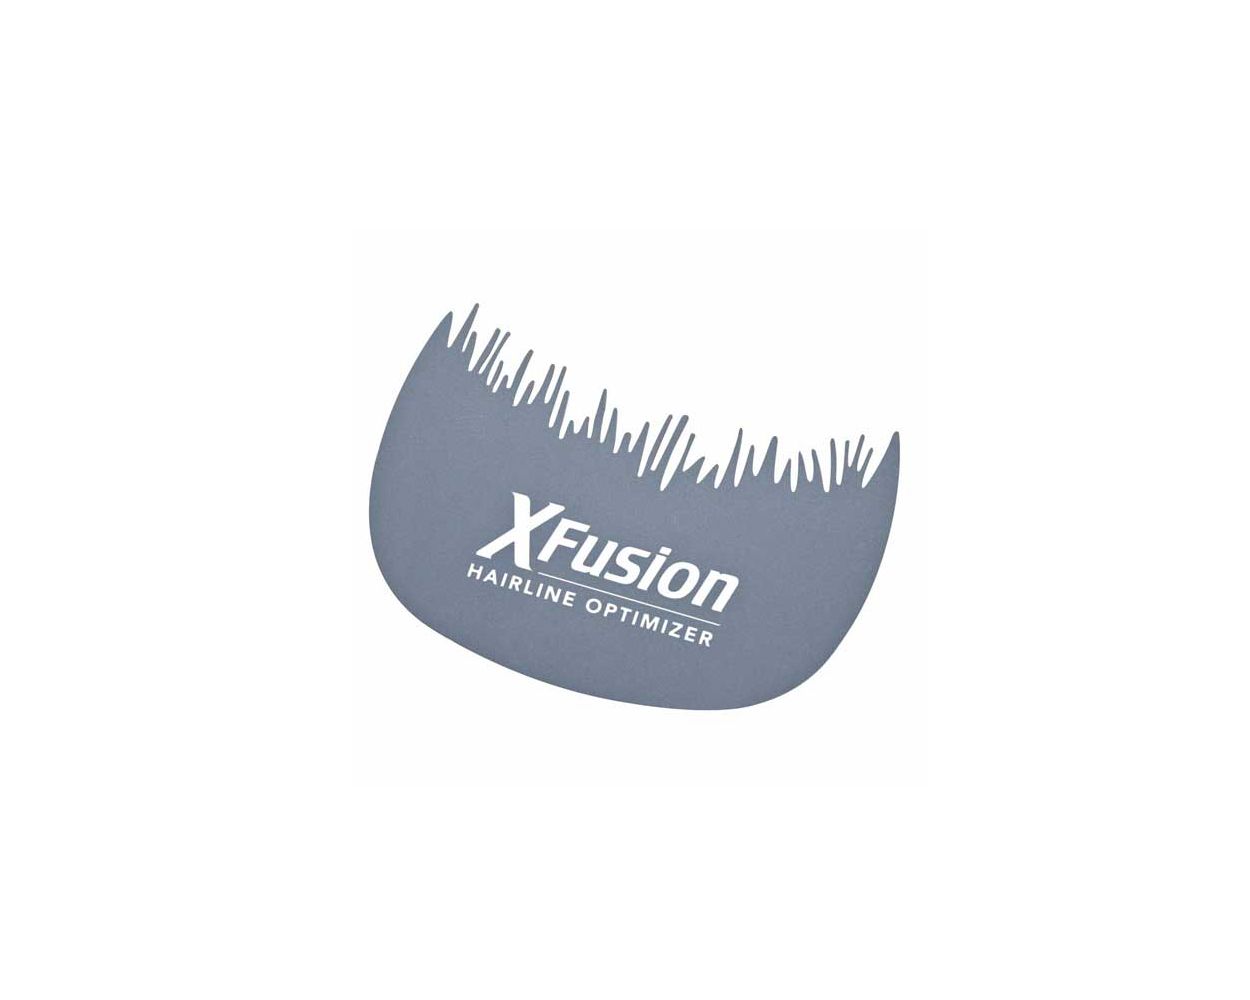 Xfusion Hairline Optimizer